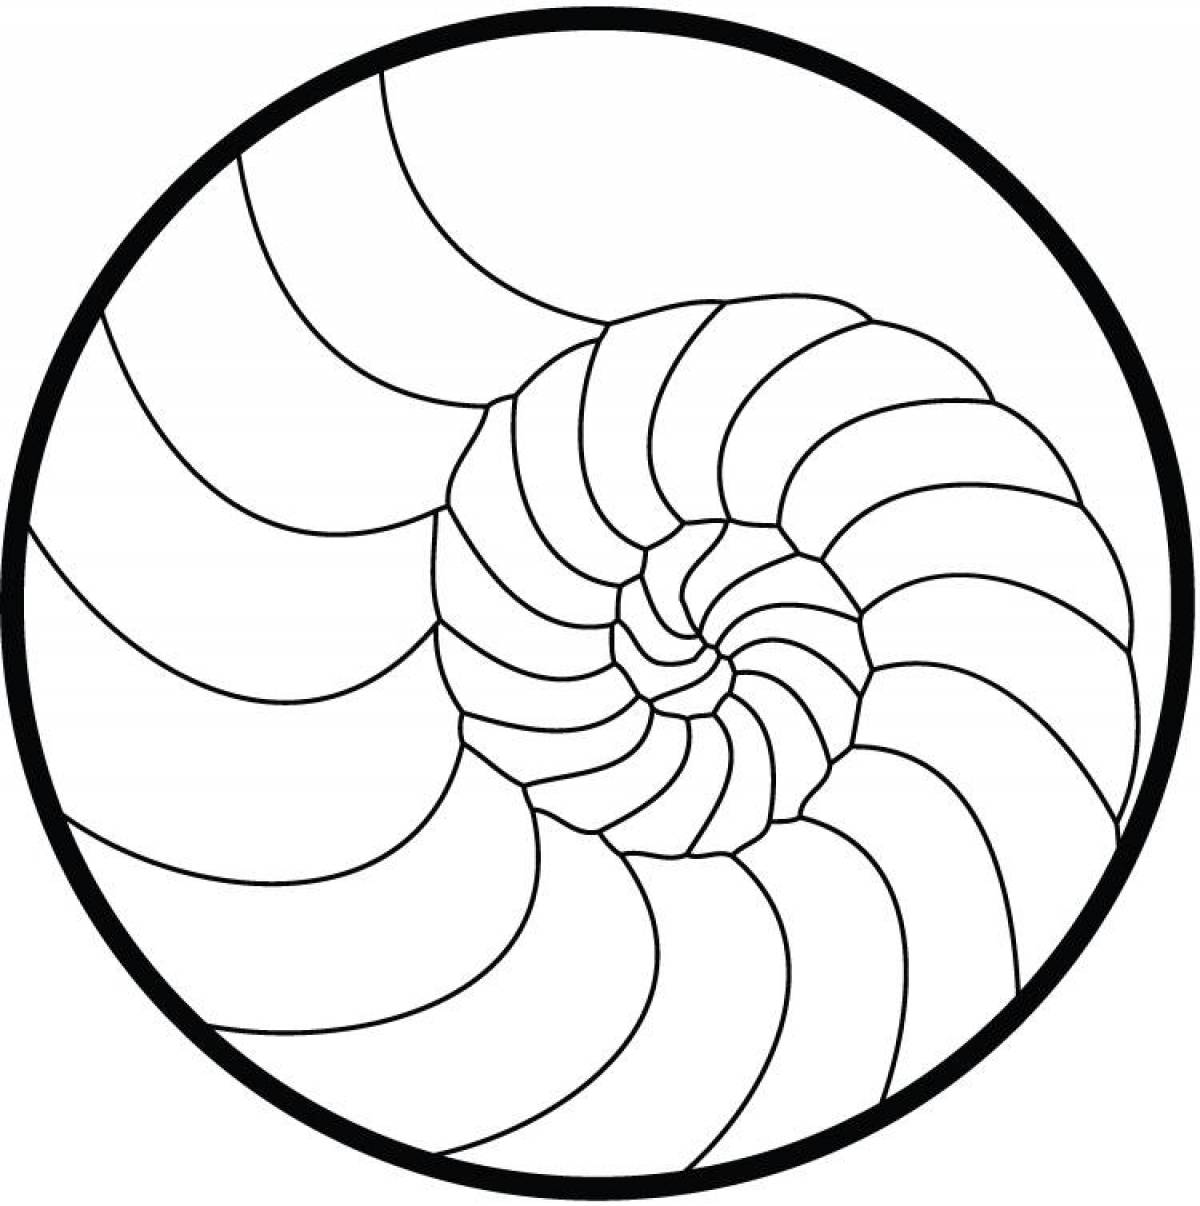 Magic spiral app